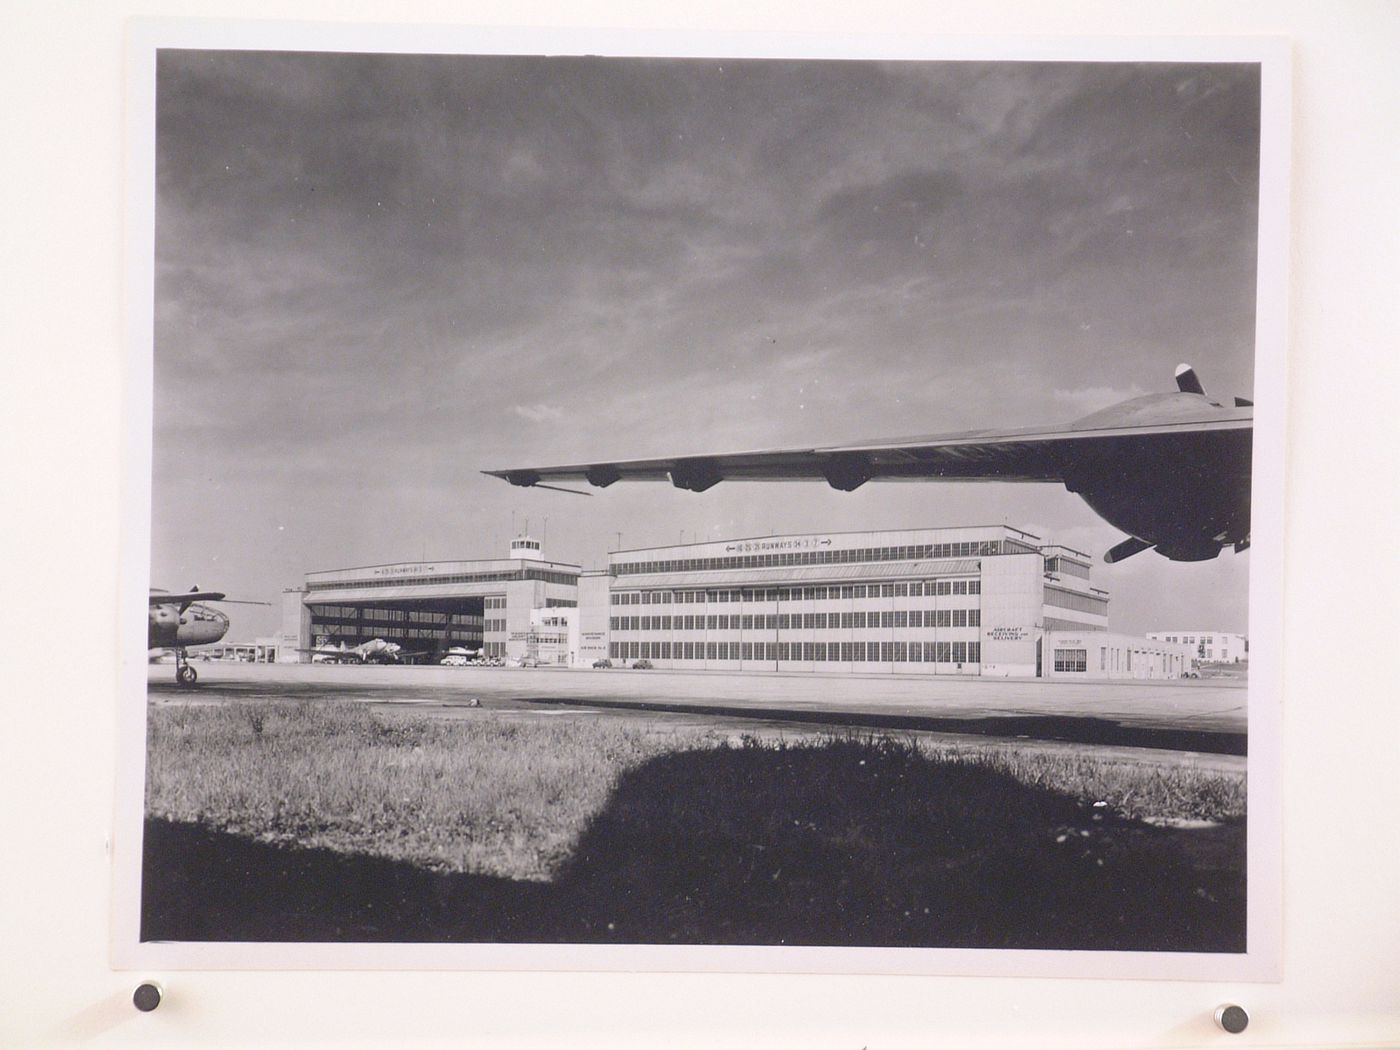 View of the principal façade of a hangar, United States Army Base, Dayton, Ohio